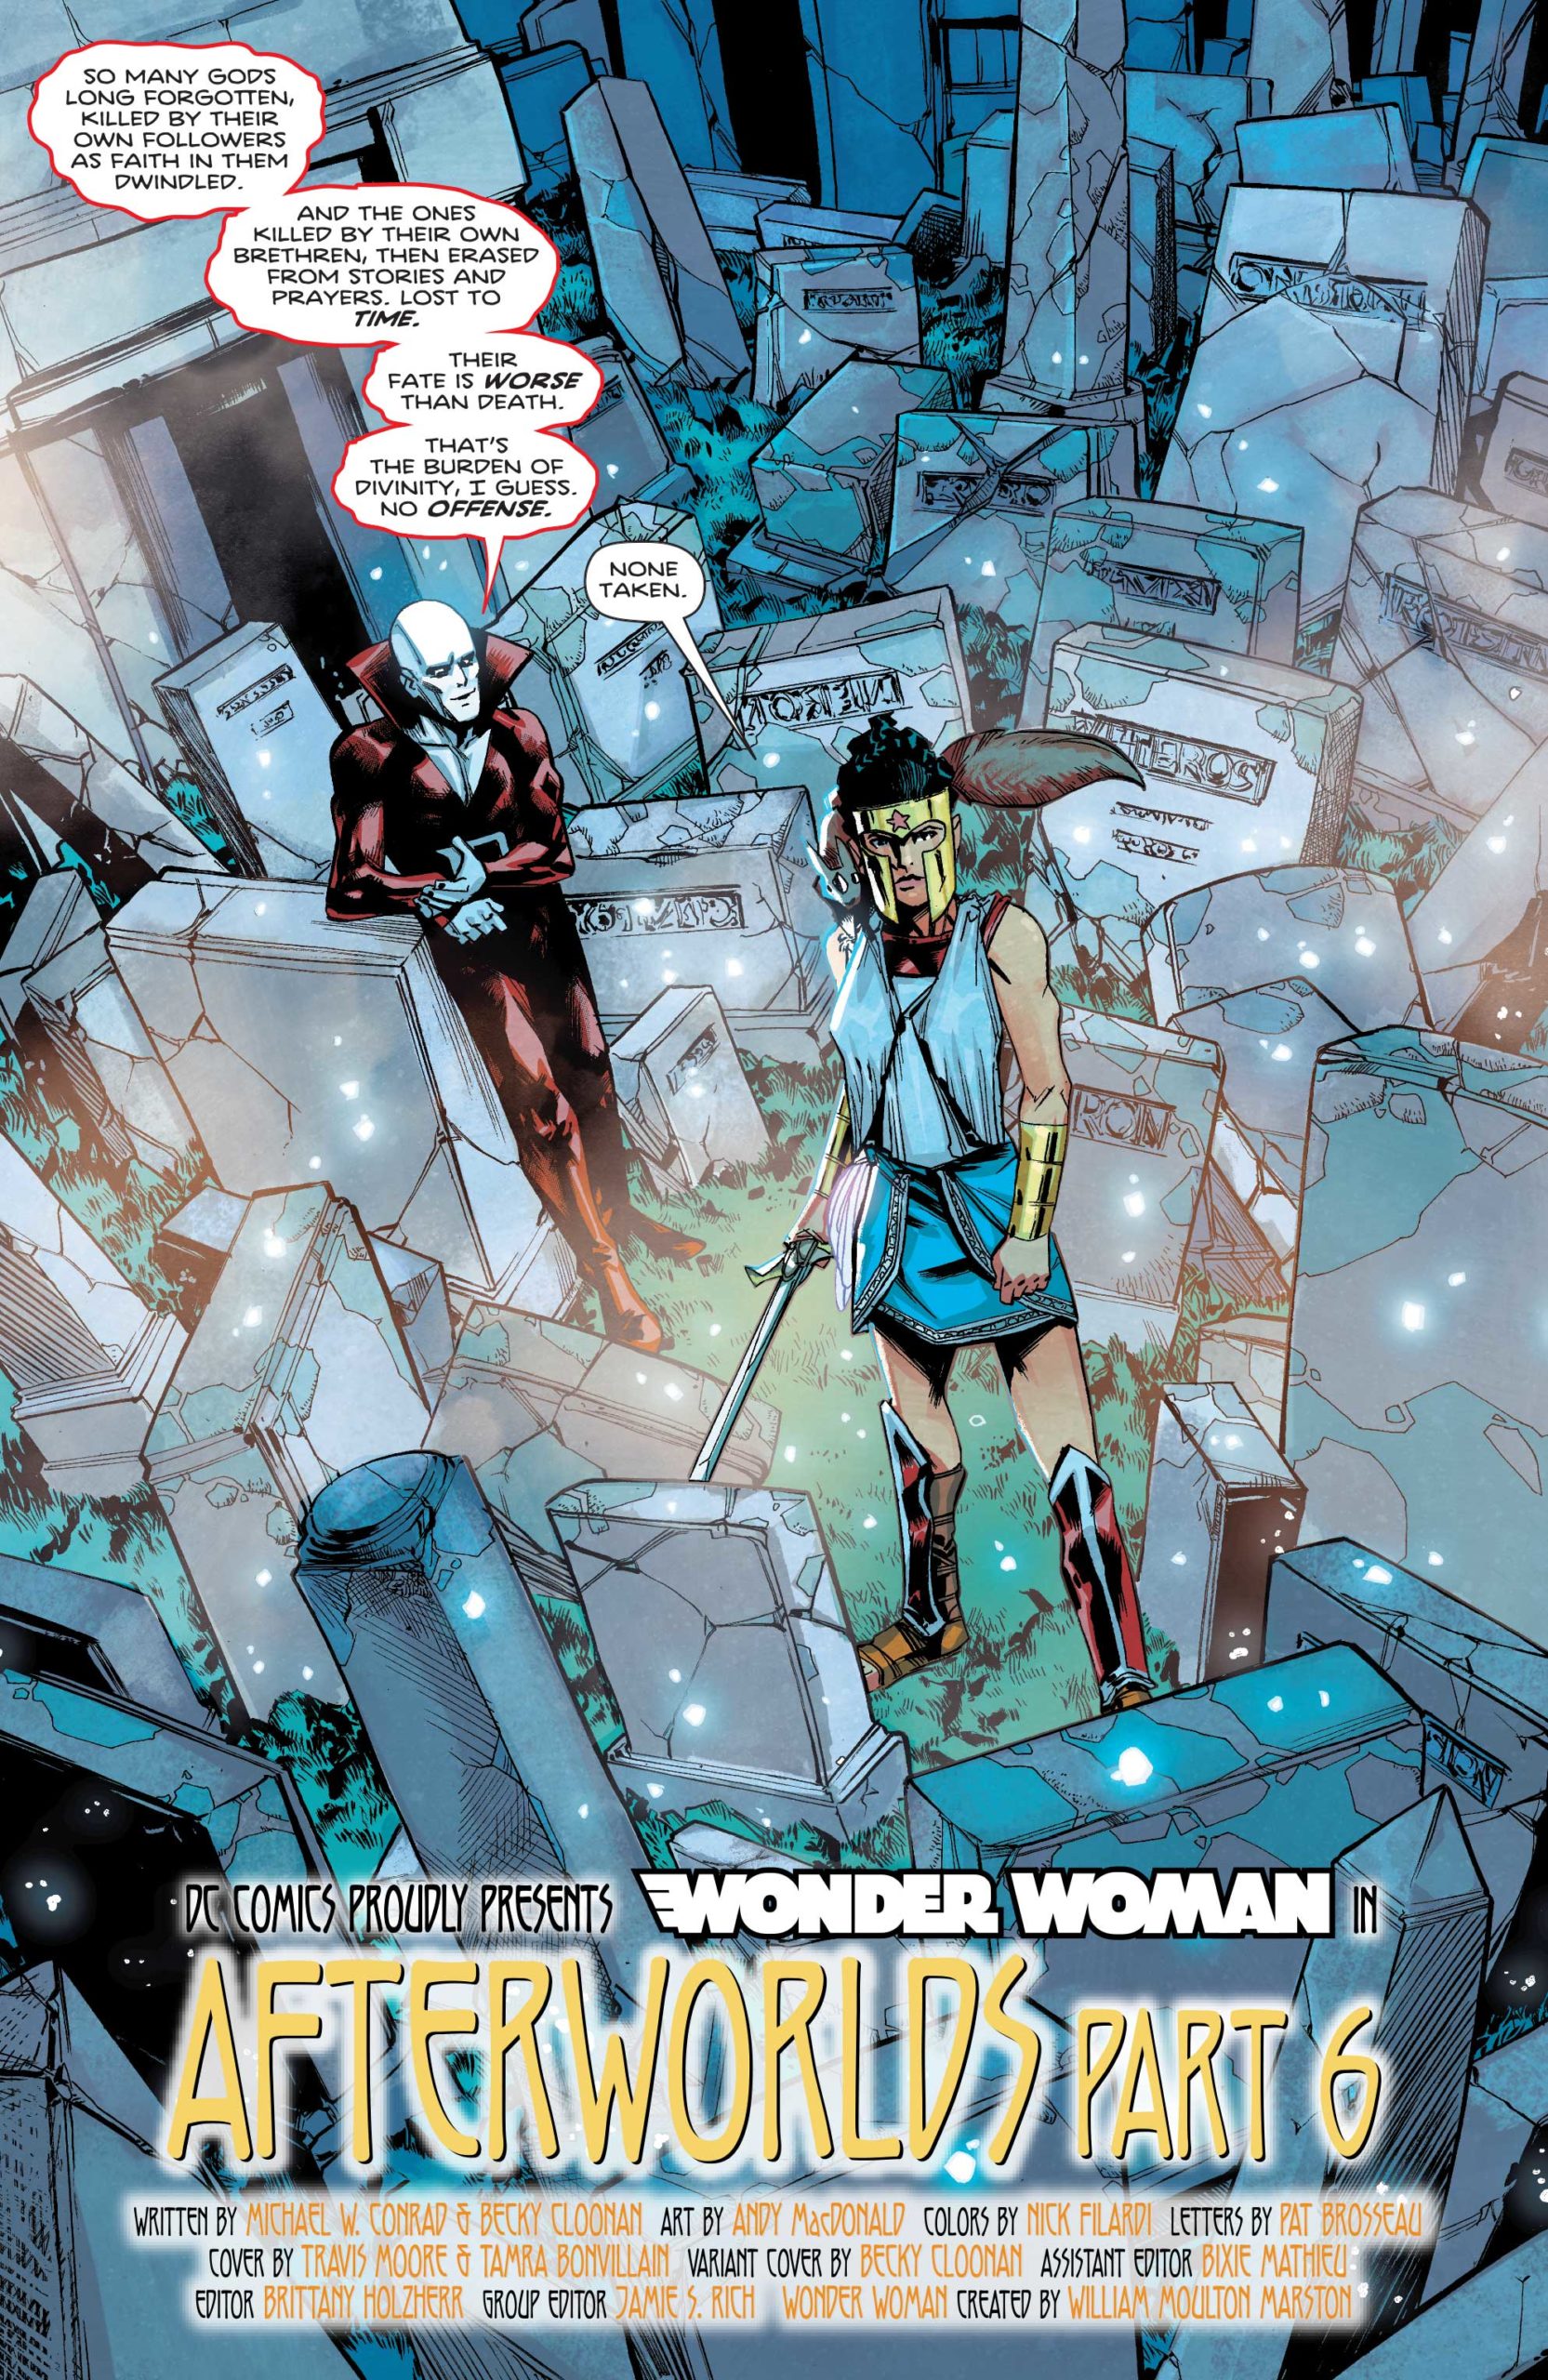 Wonder Woman 775 DC Comics news